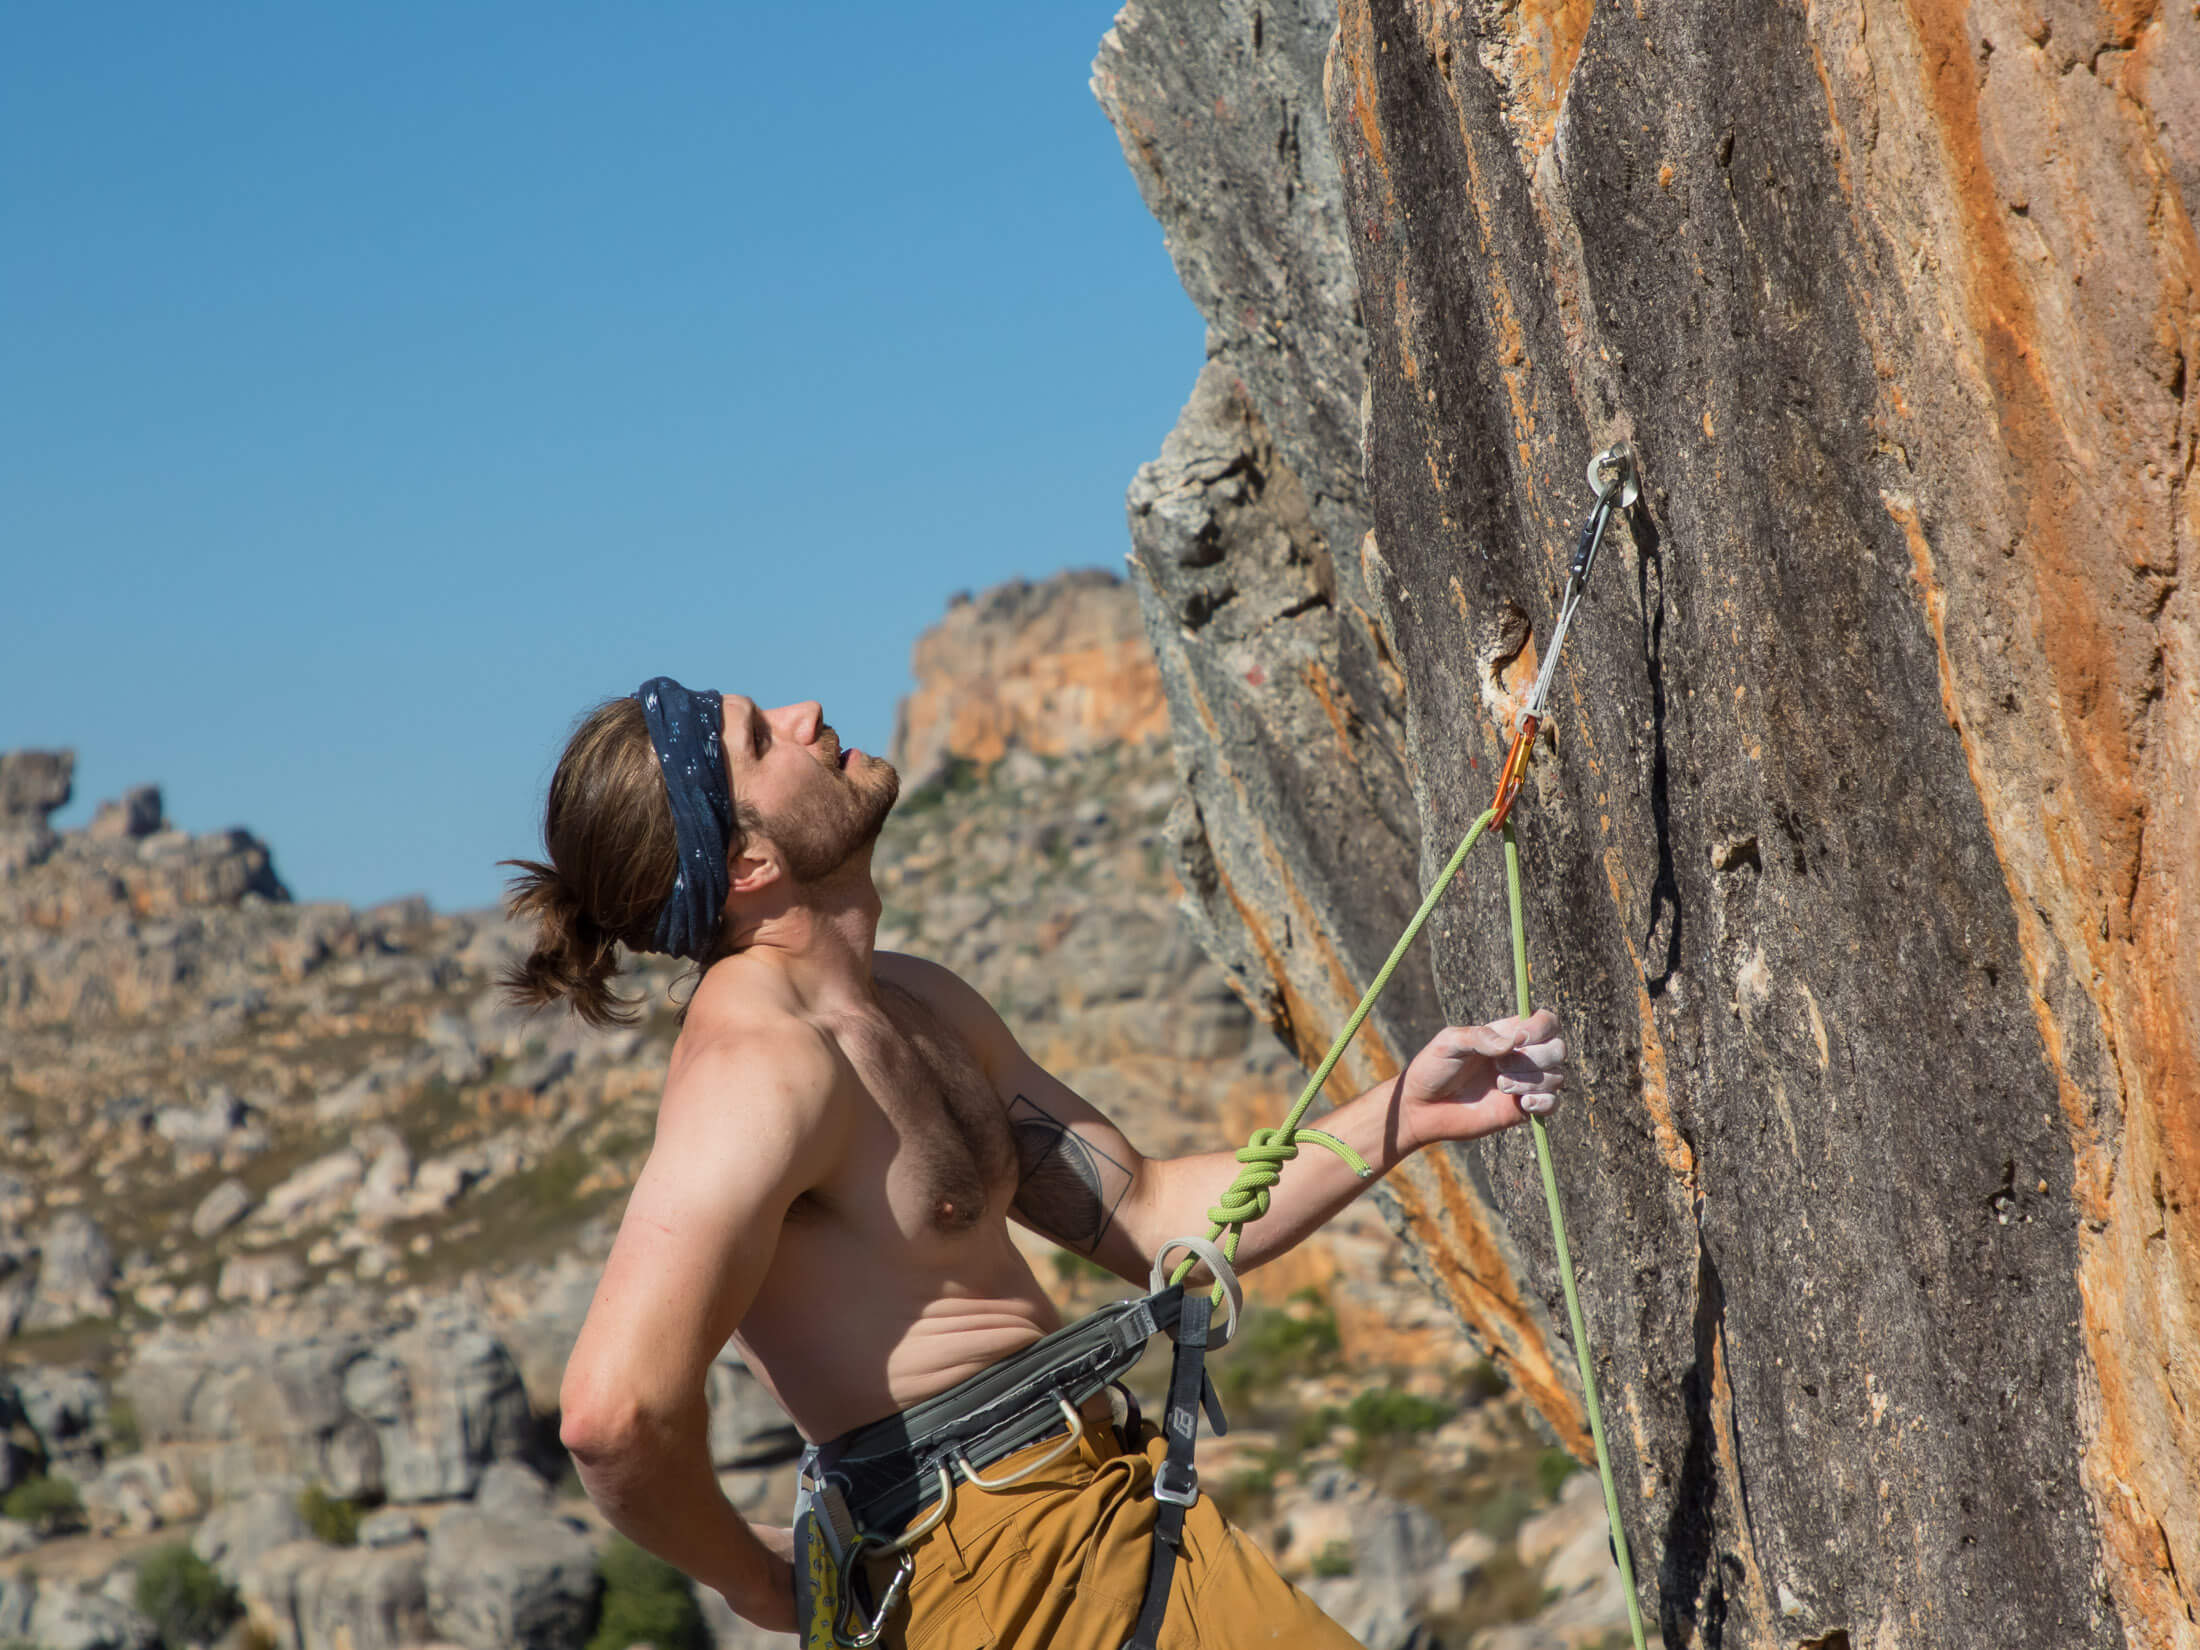 climber handing on rope